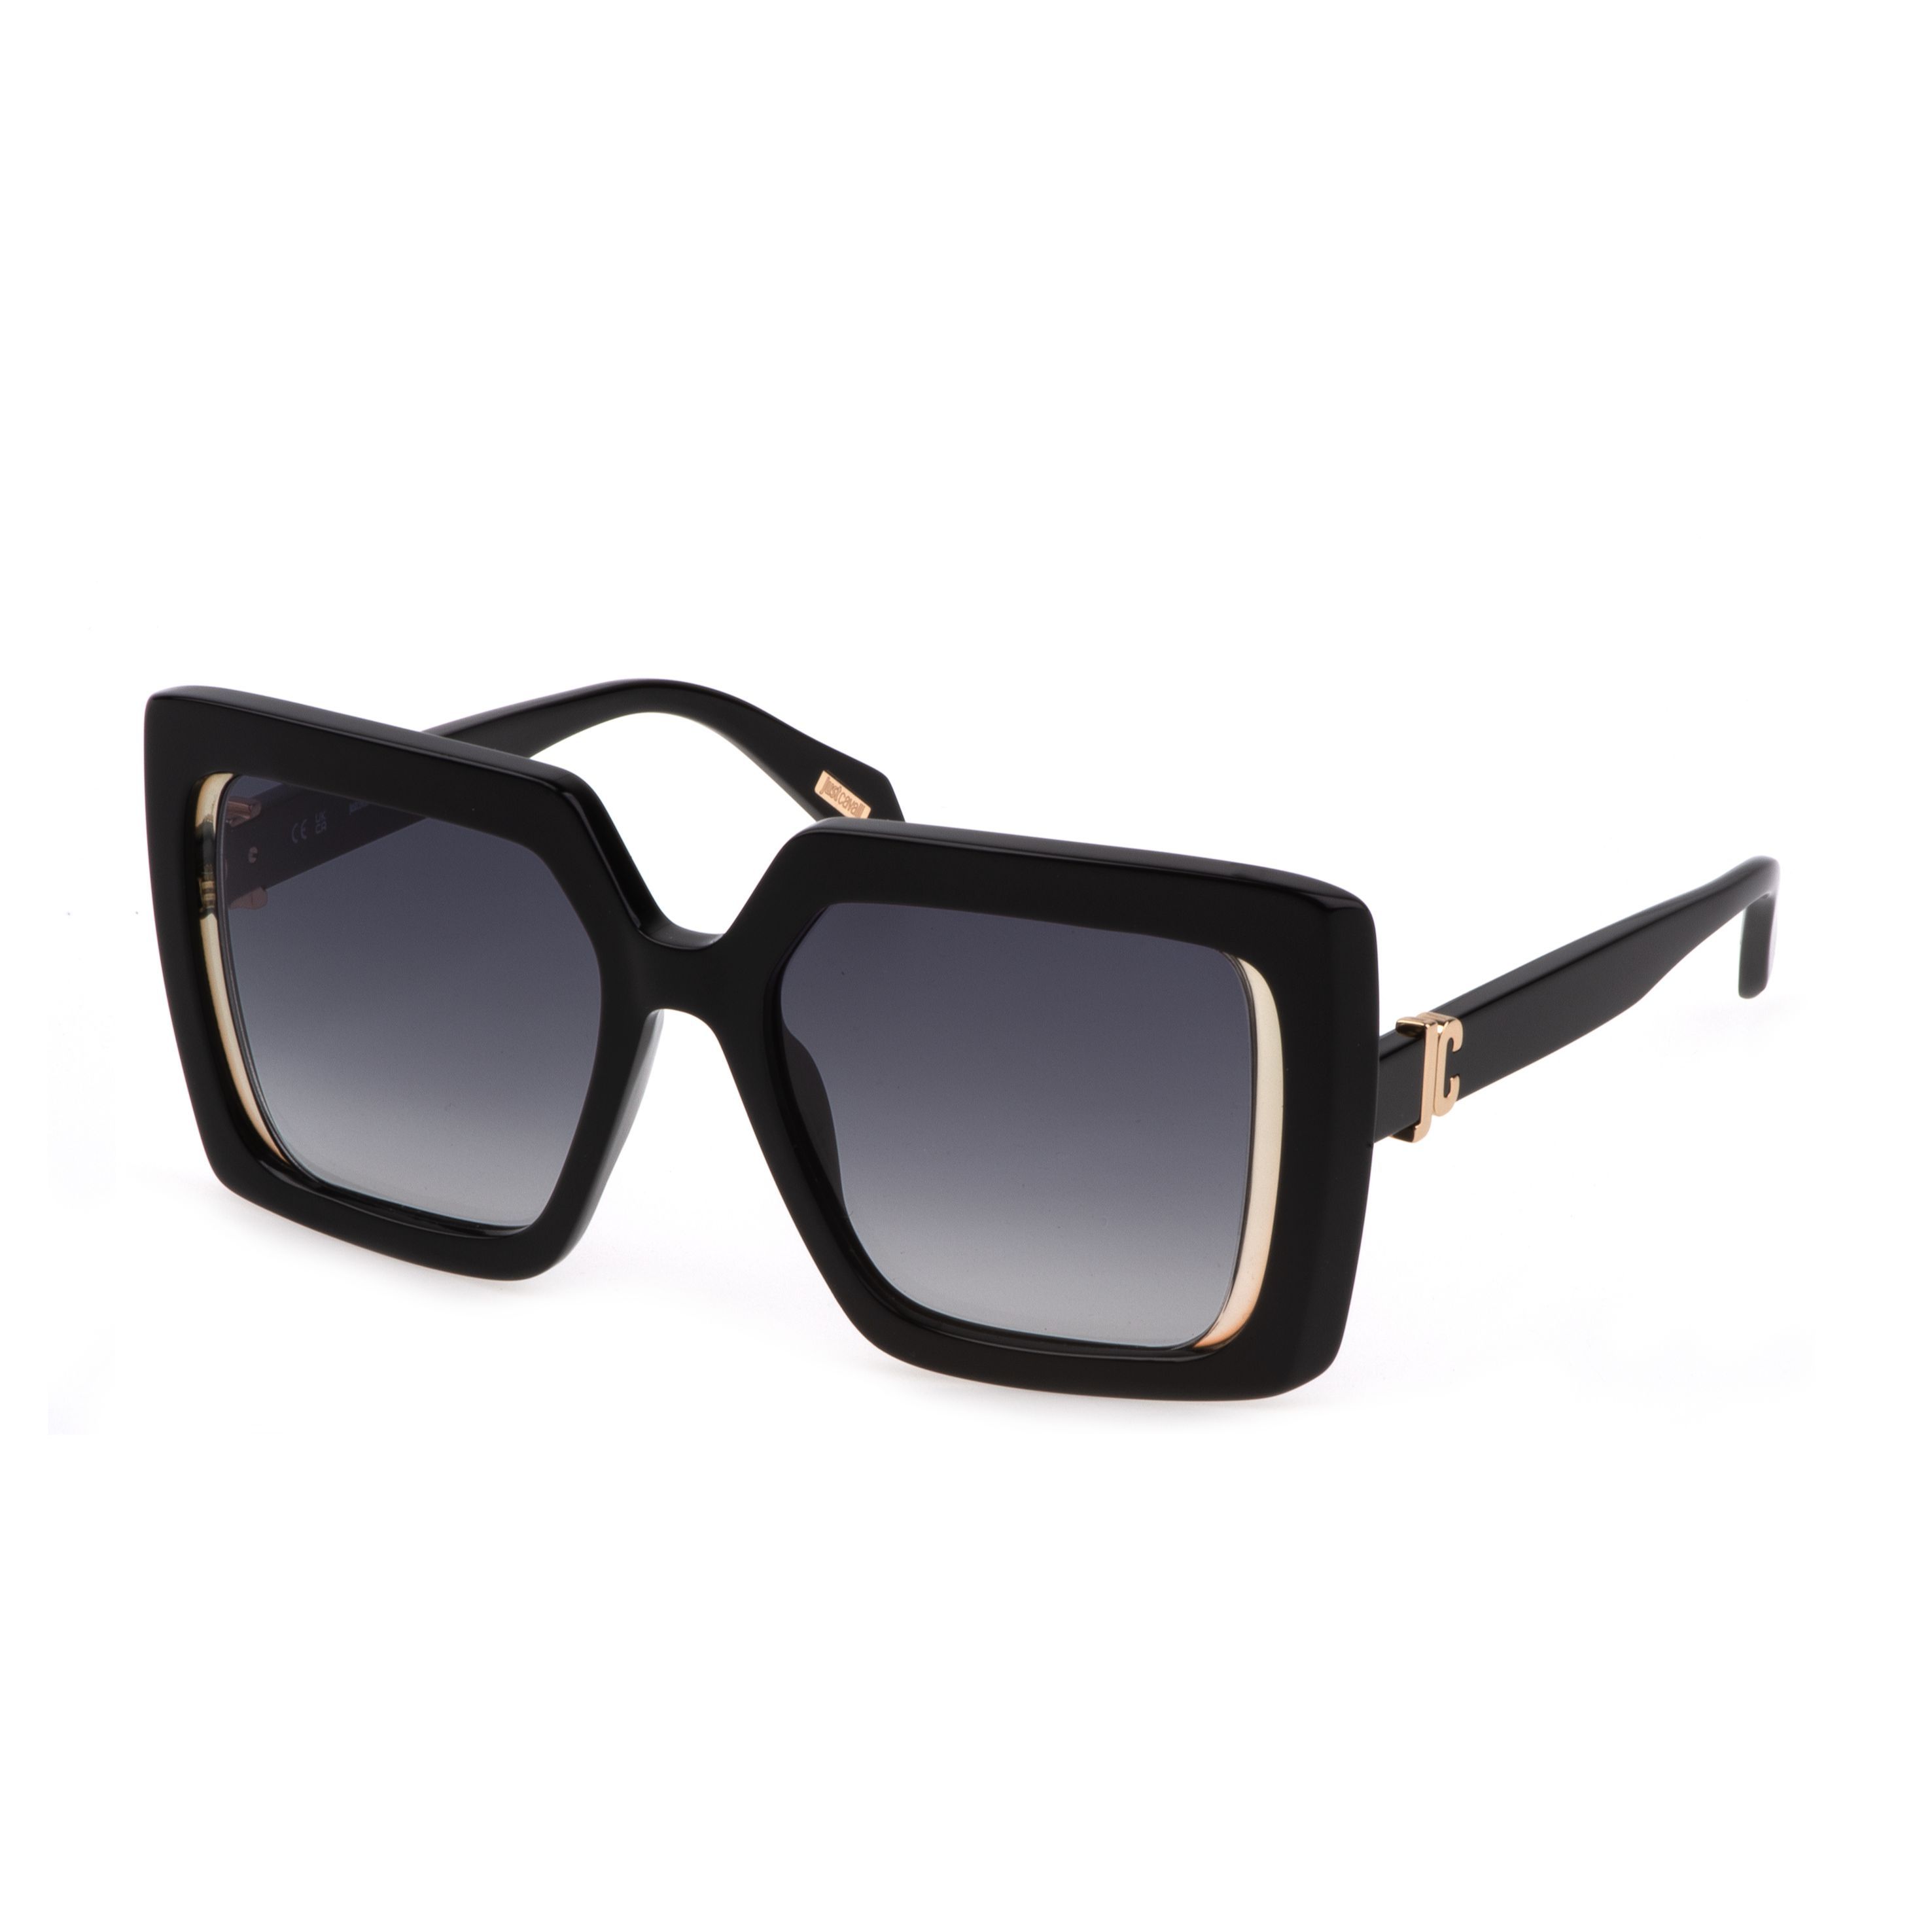 SJC027 Square Sunglasses 700 - size 53